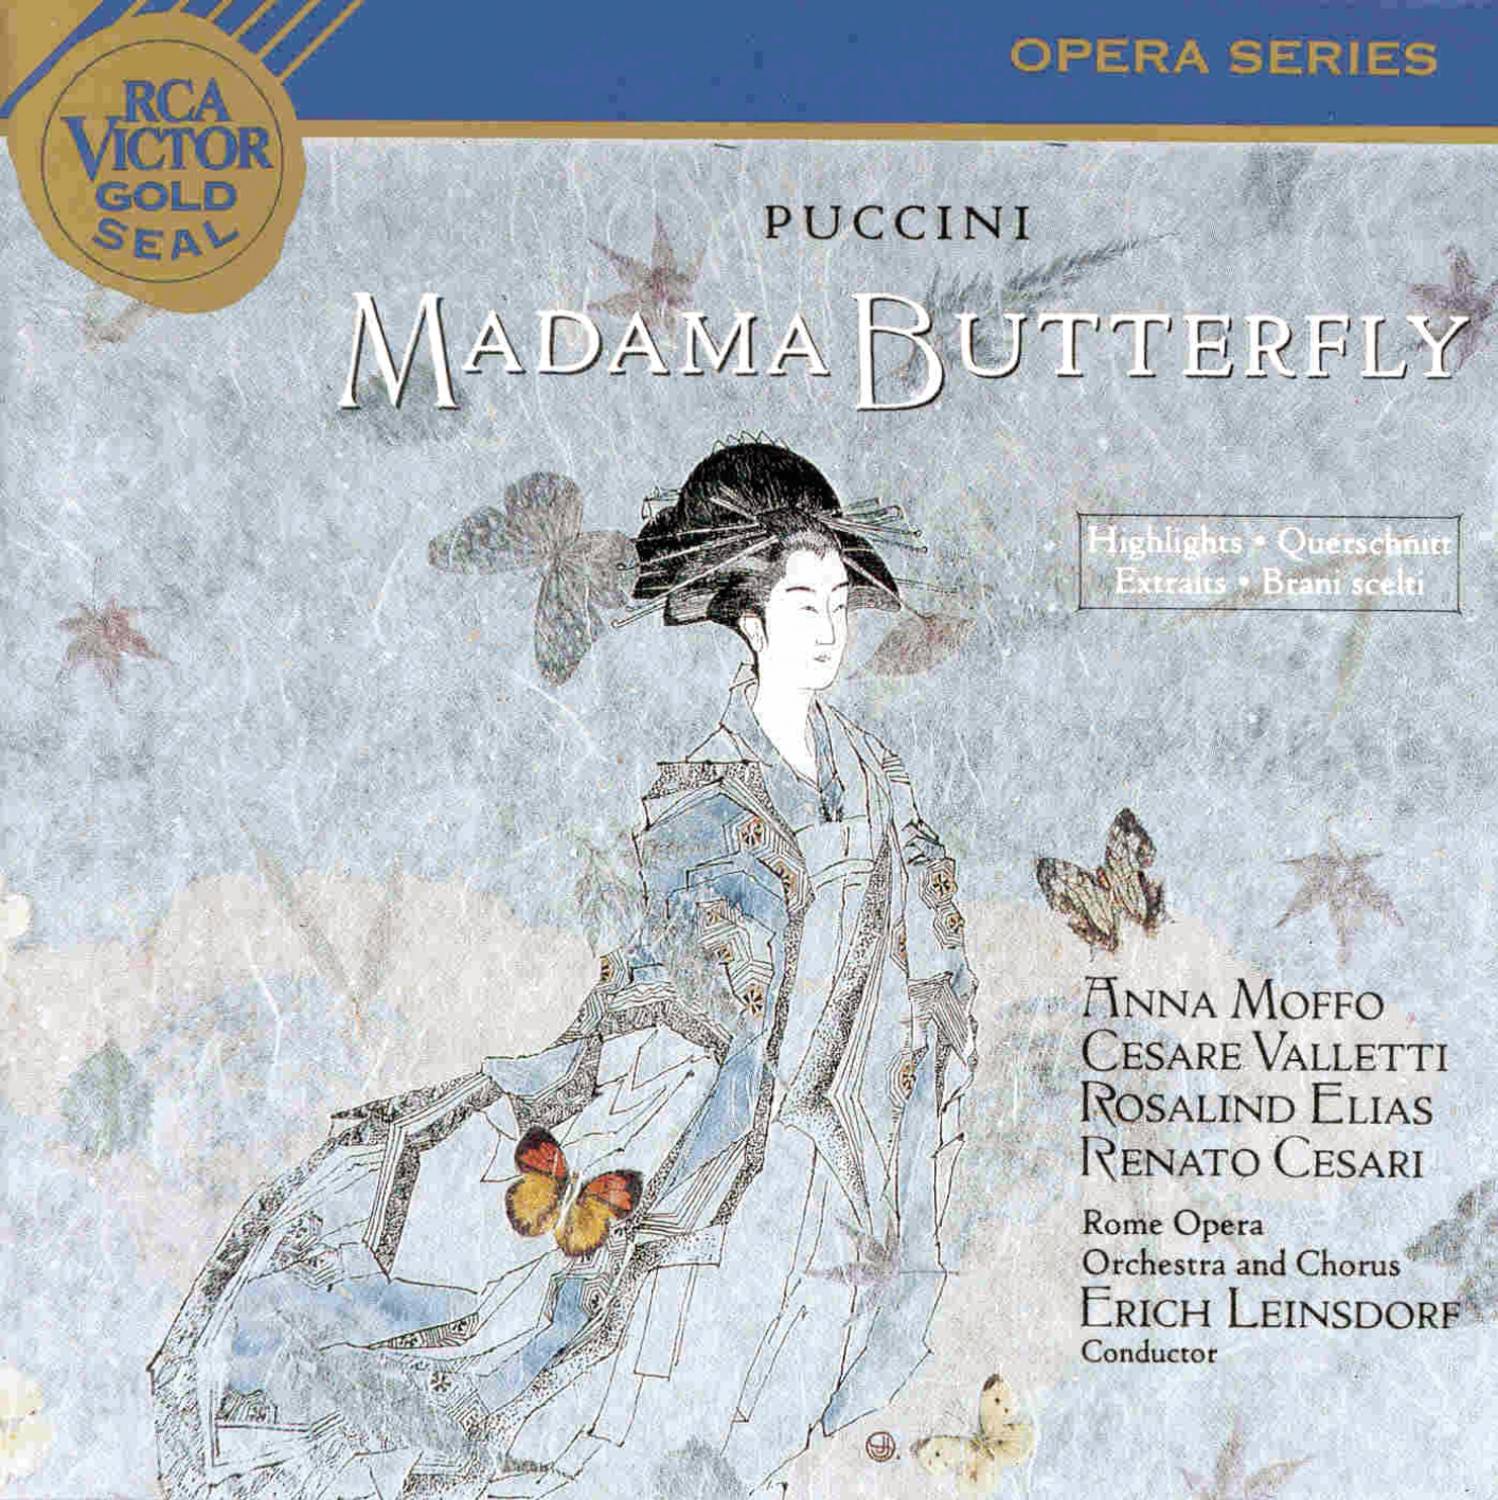 Madama Butterfly: Vogliatemi bene (Love Duet)